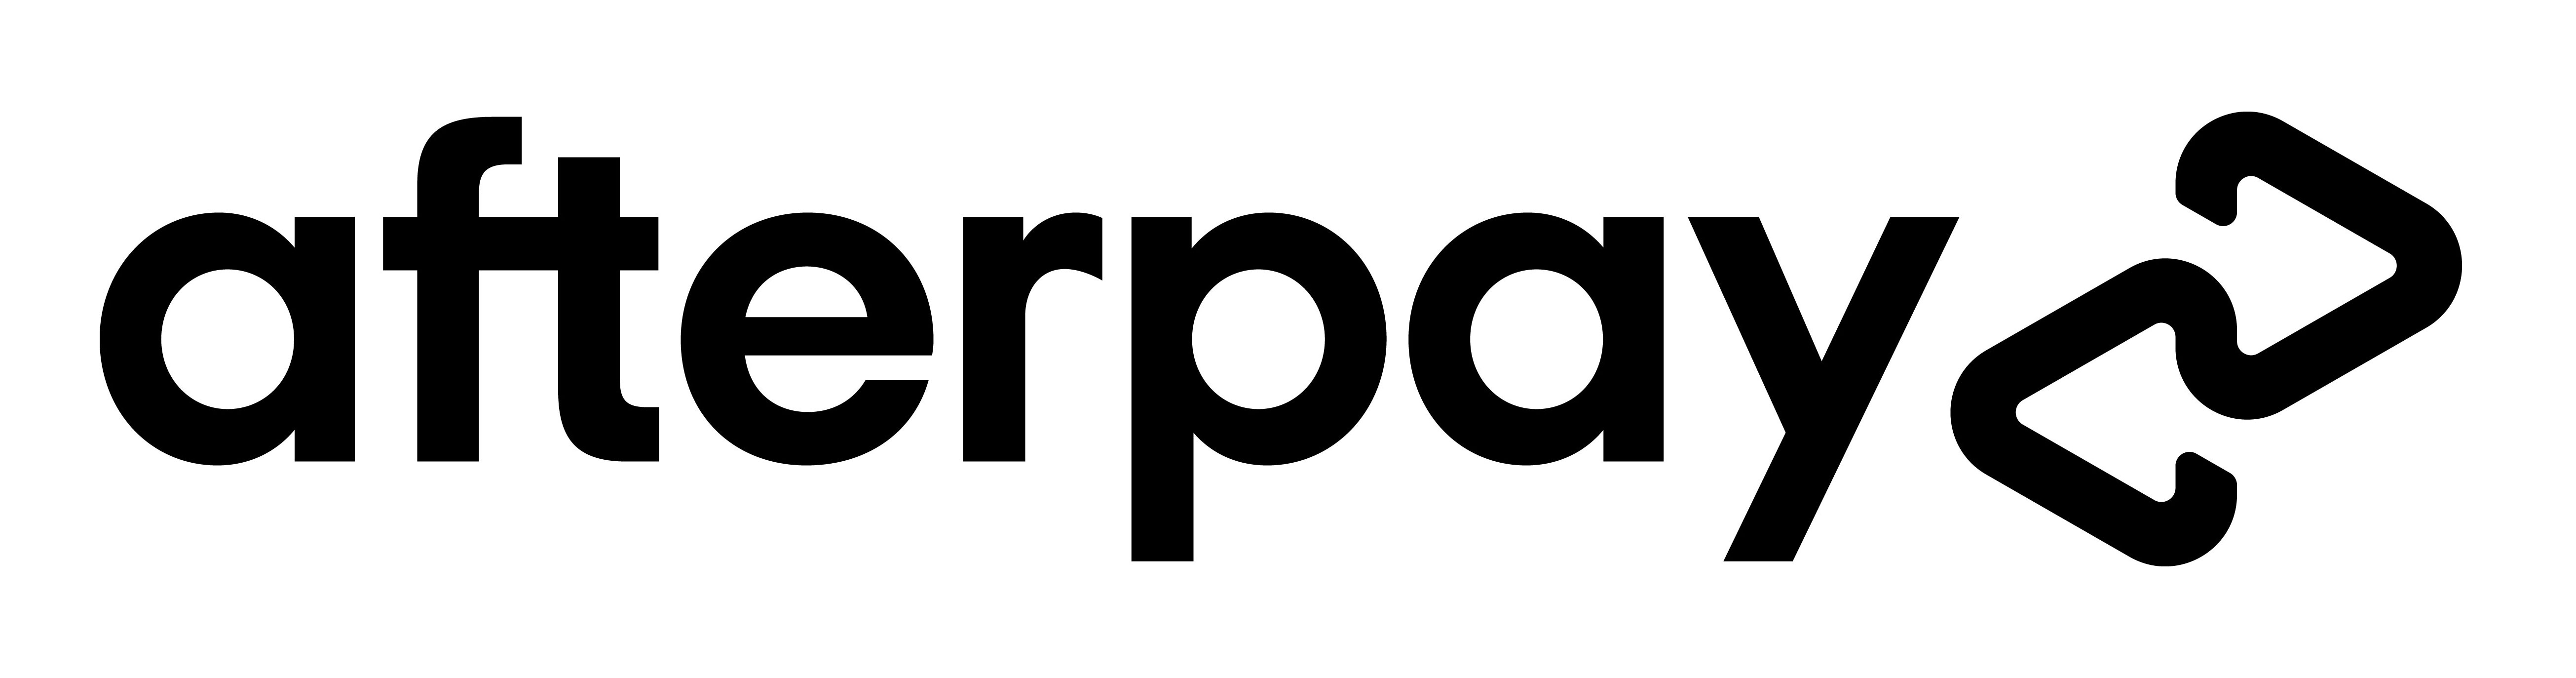 Afterpay logo blackwht